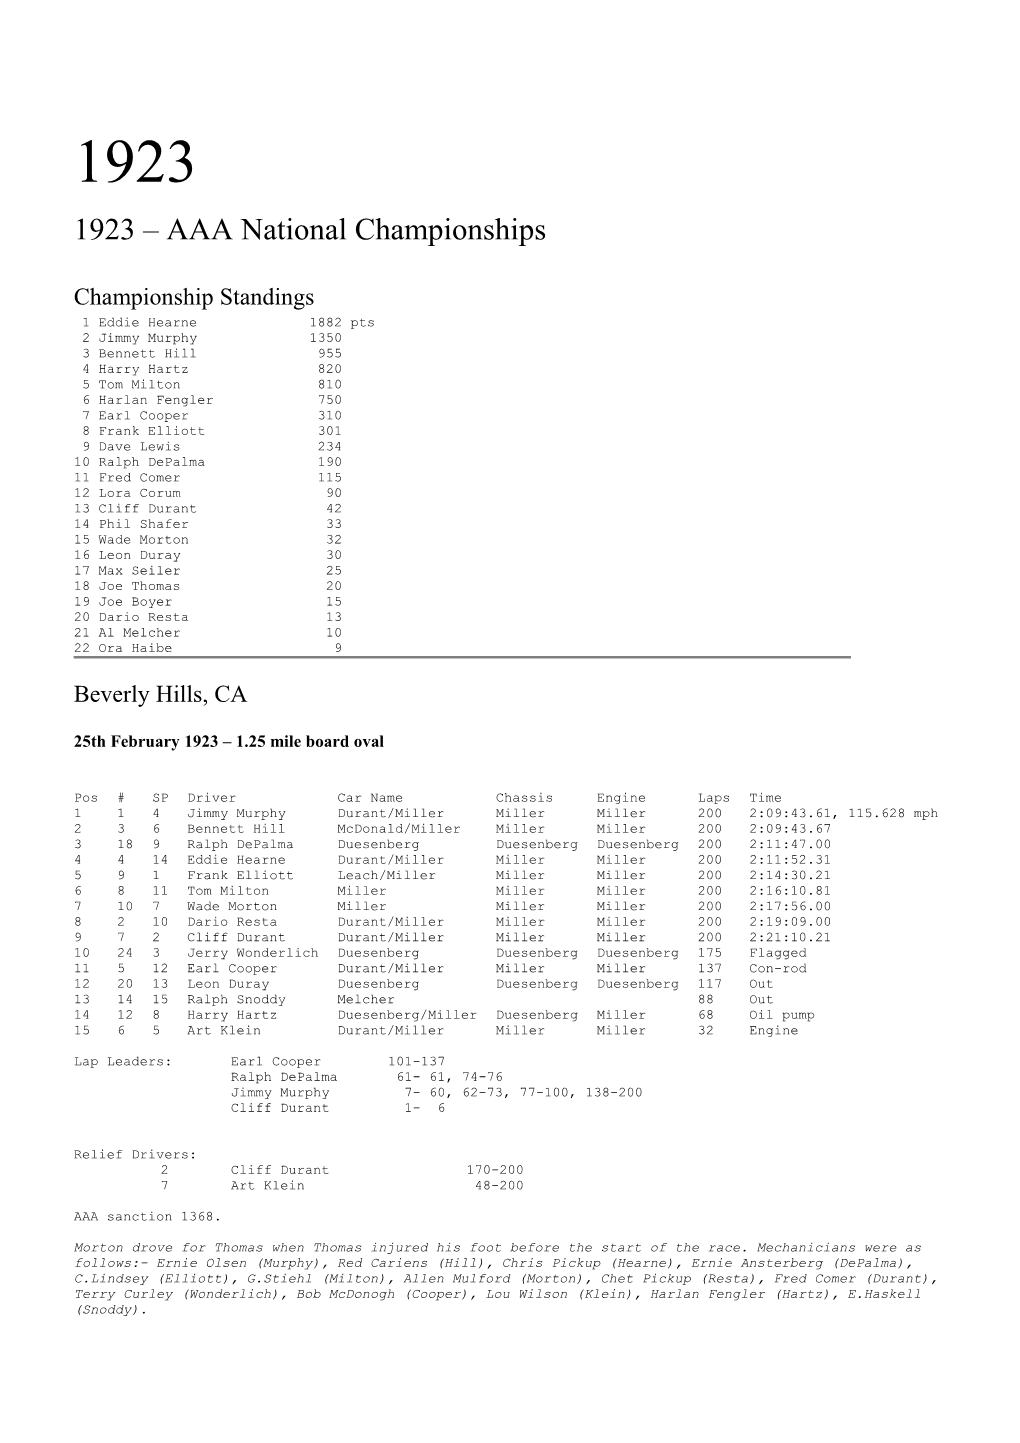 1923 – AAA National Championships